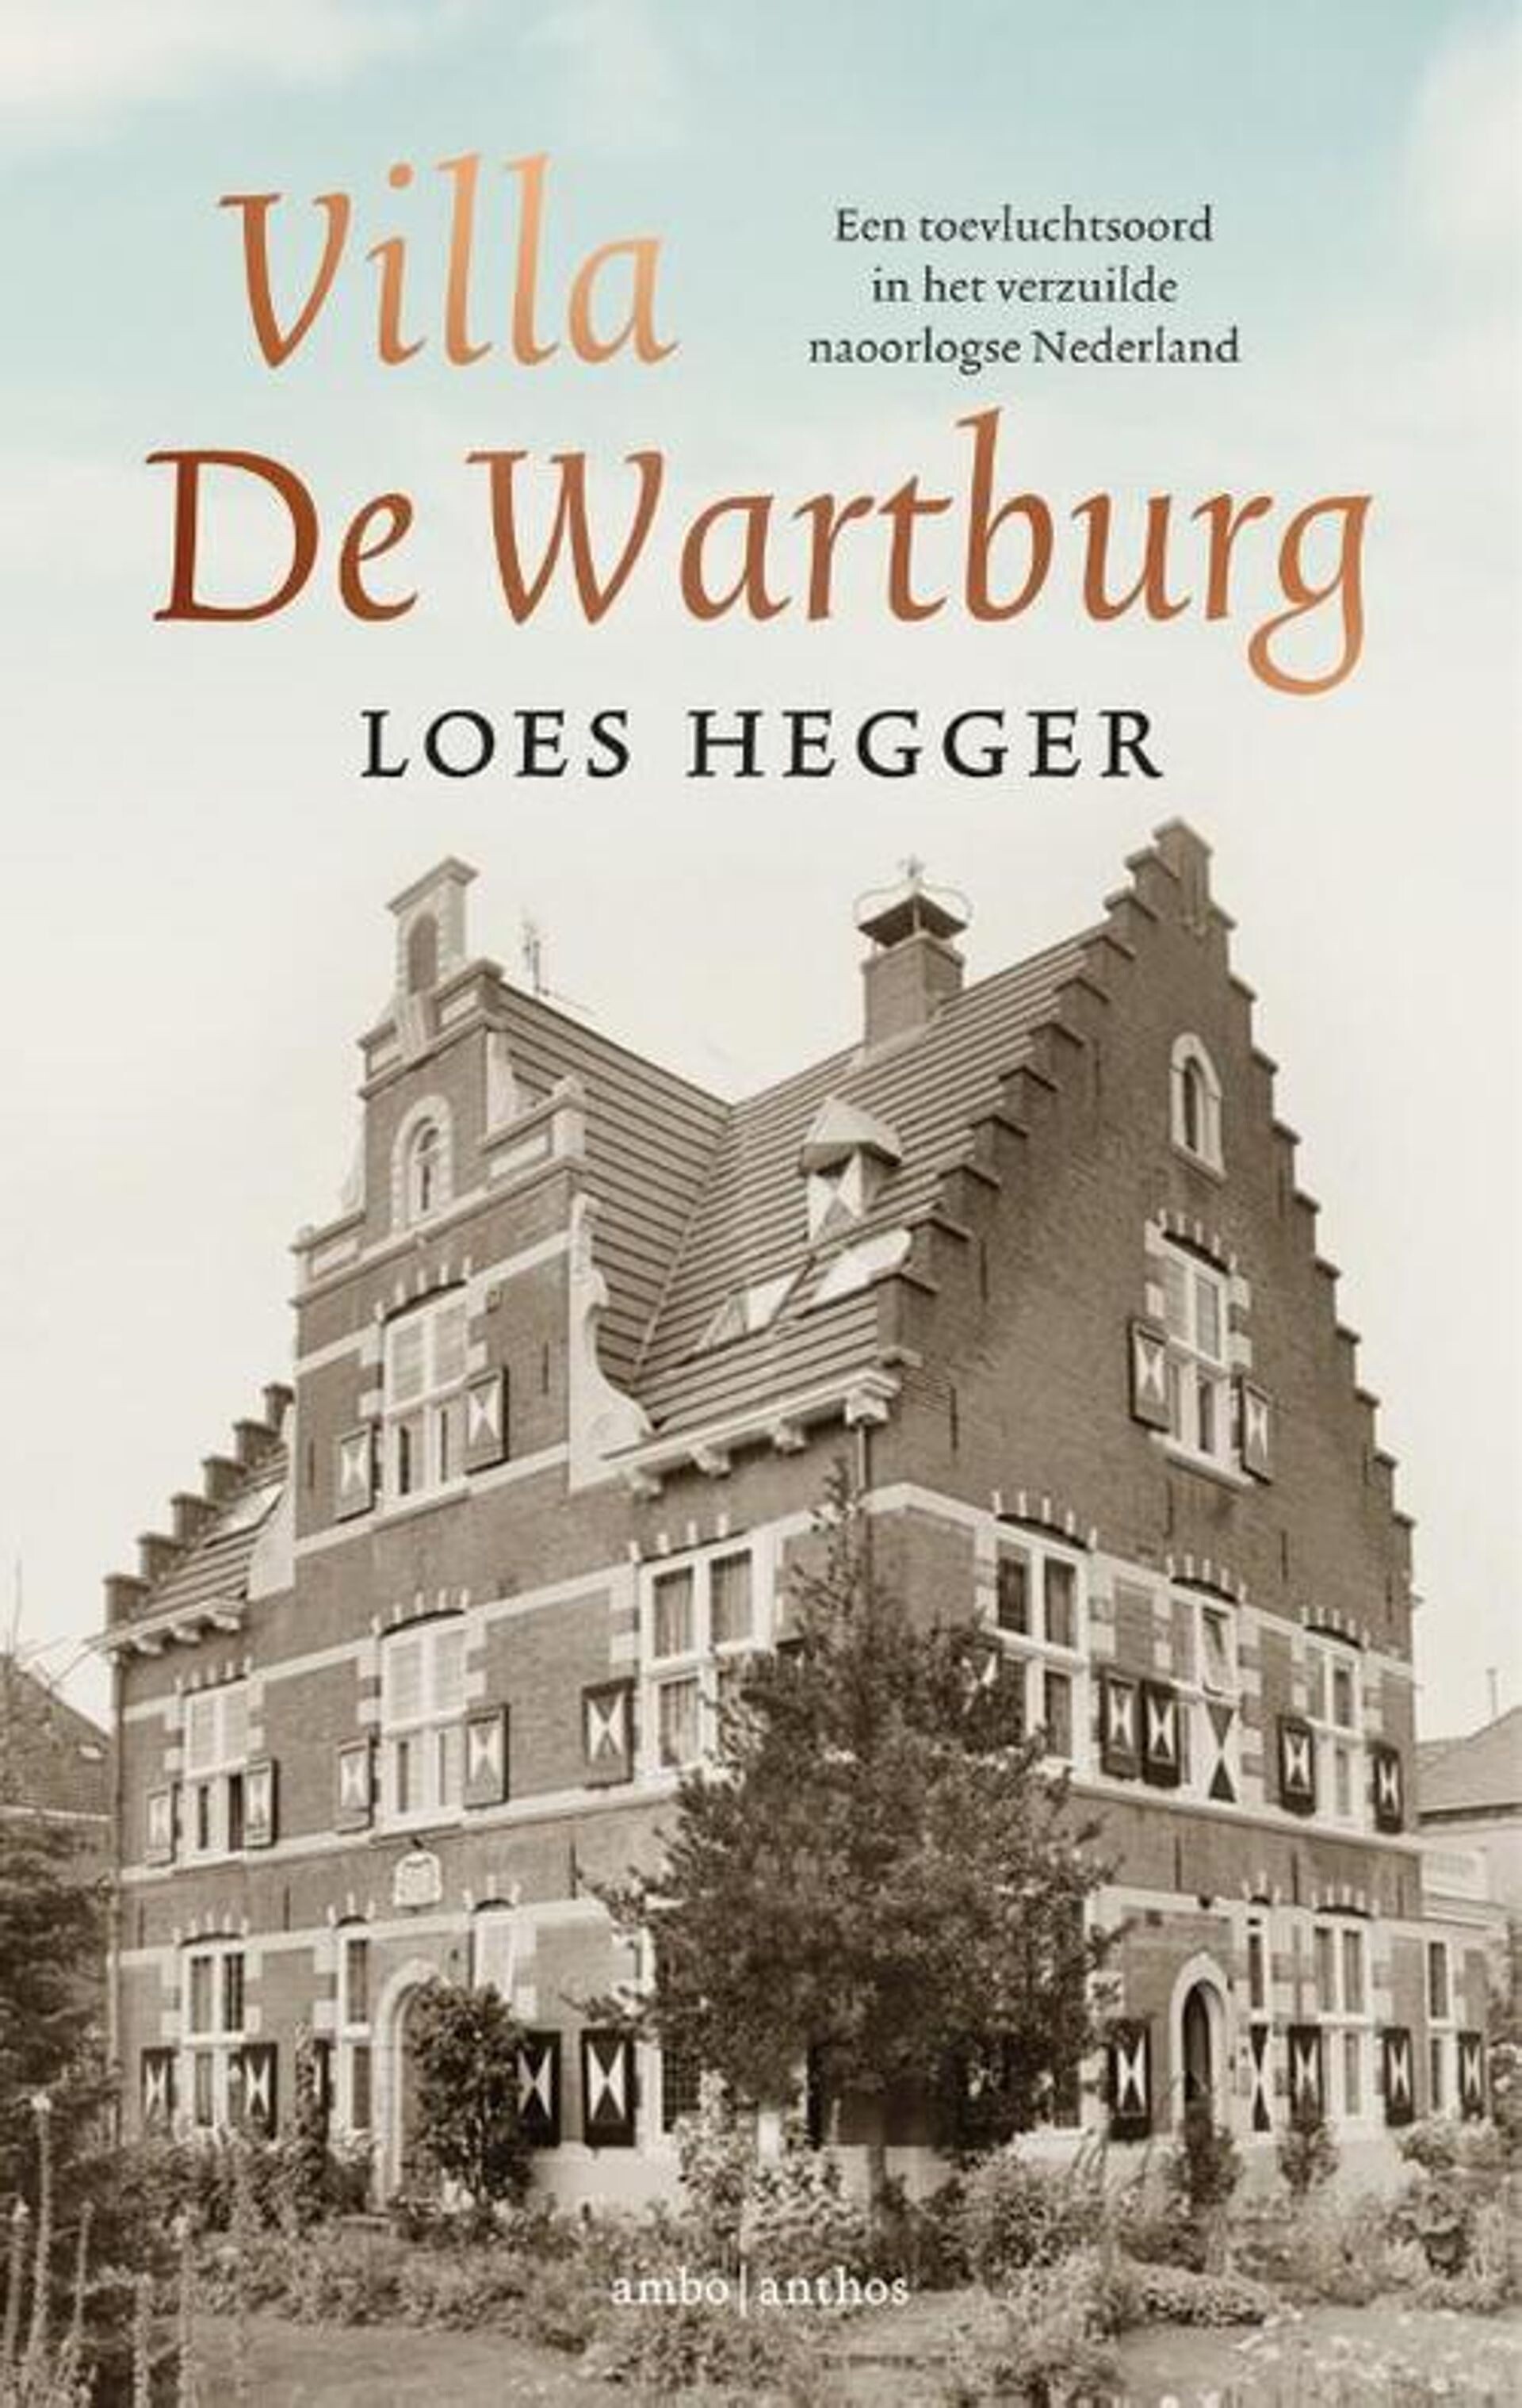 #888 - Loes Hegger over ‘Villa de Wartburg’